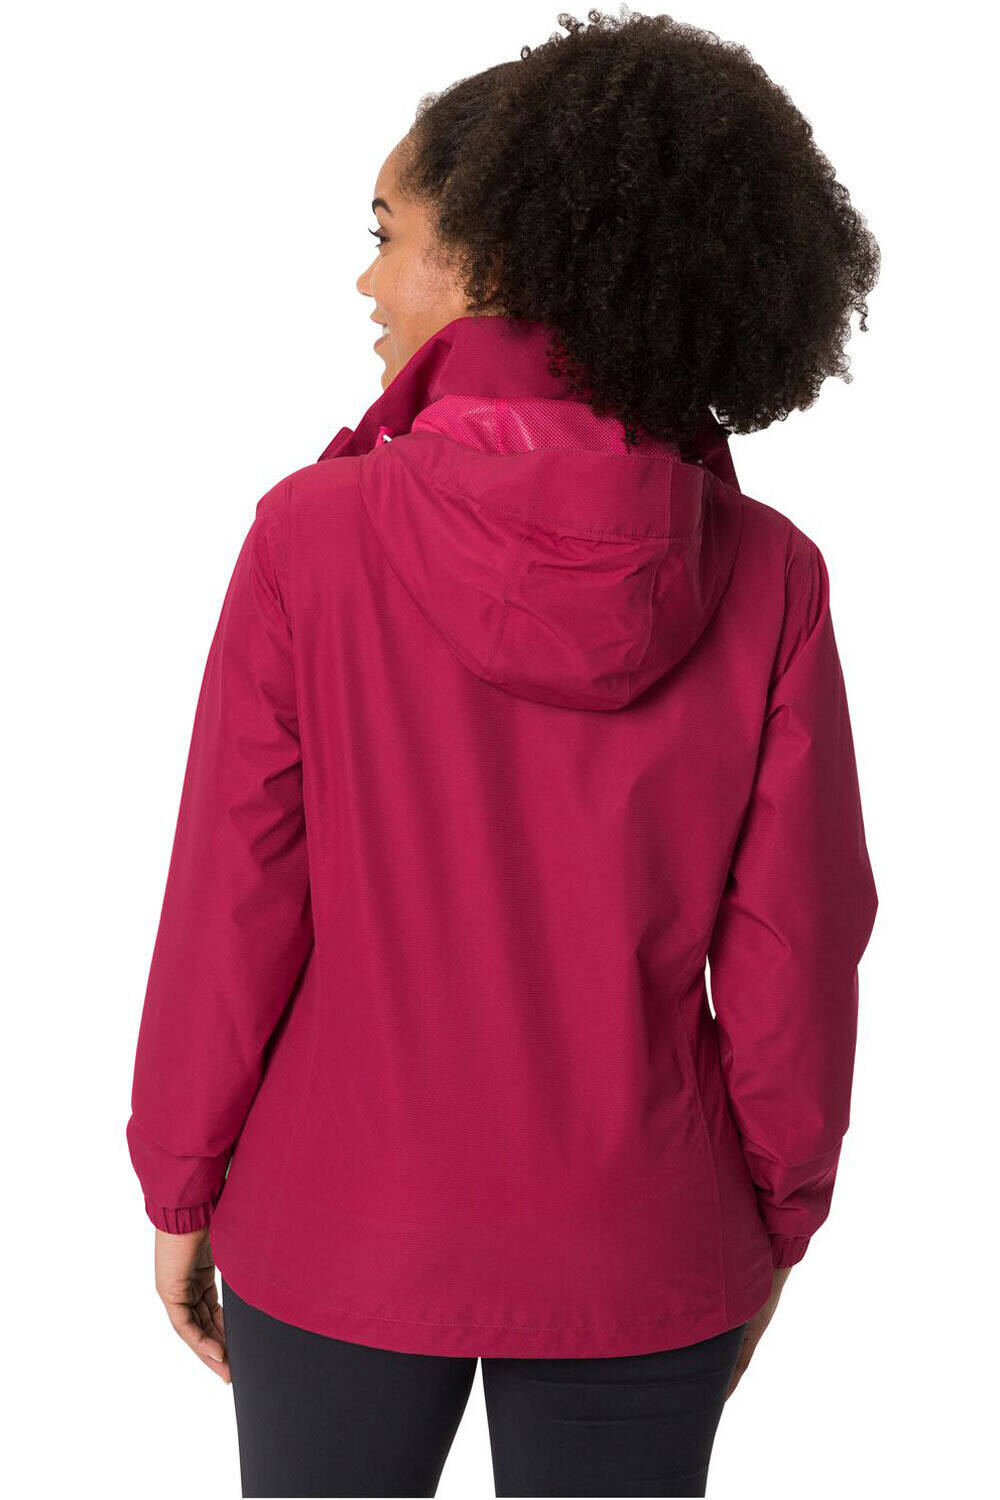 Vaude chaqueta impermeable mujer Women  s Escape Light Jacket vista trasera